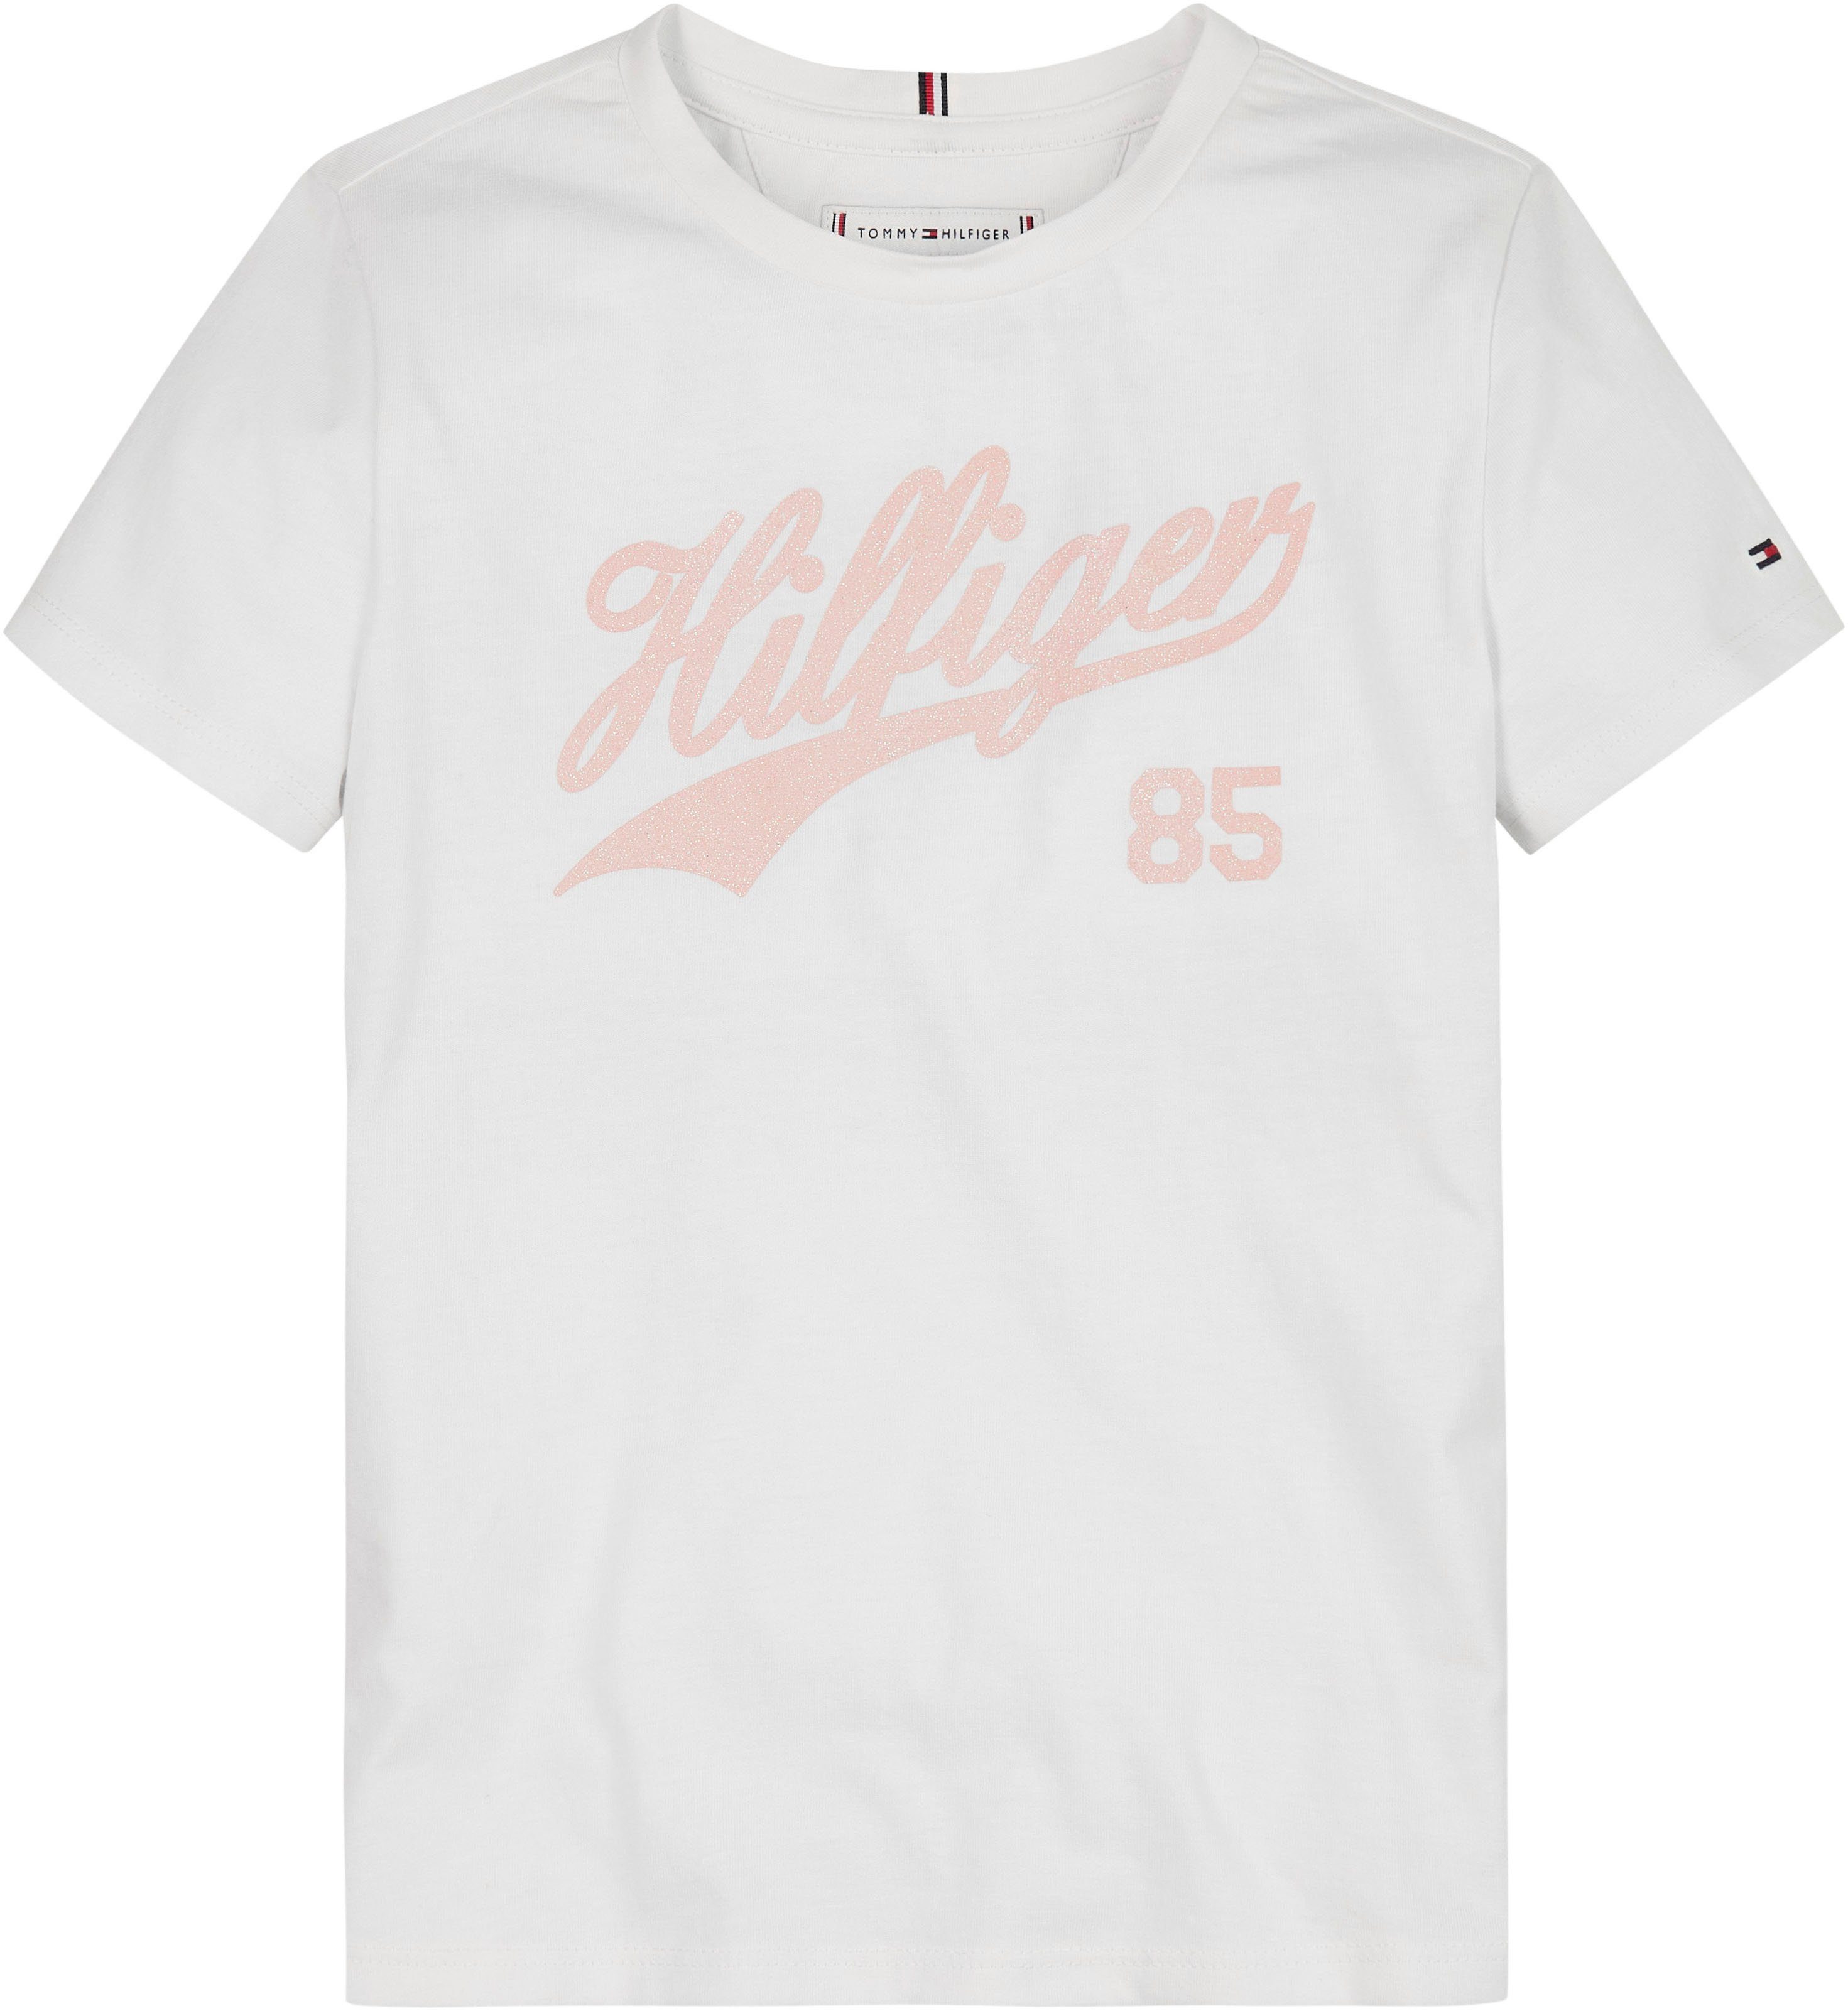 S/S Tommy TEE HILFIGER SCRIPT white Hilfiger T-Shirt